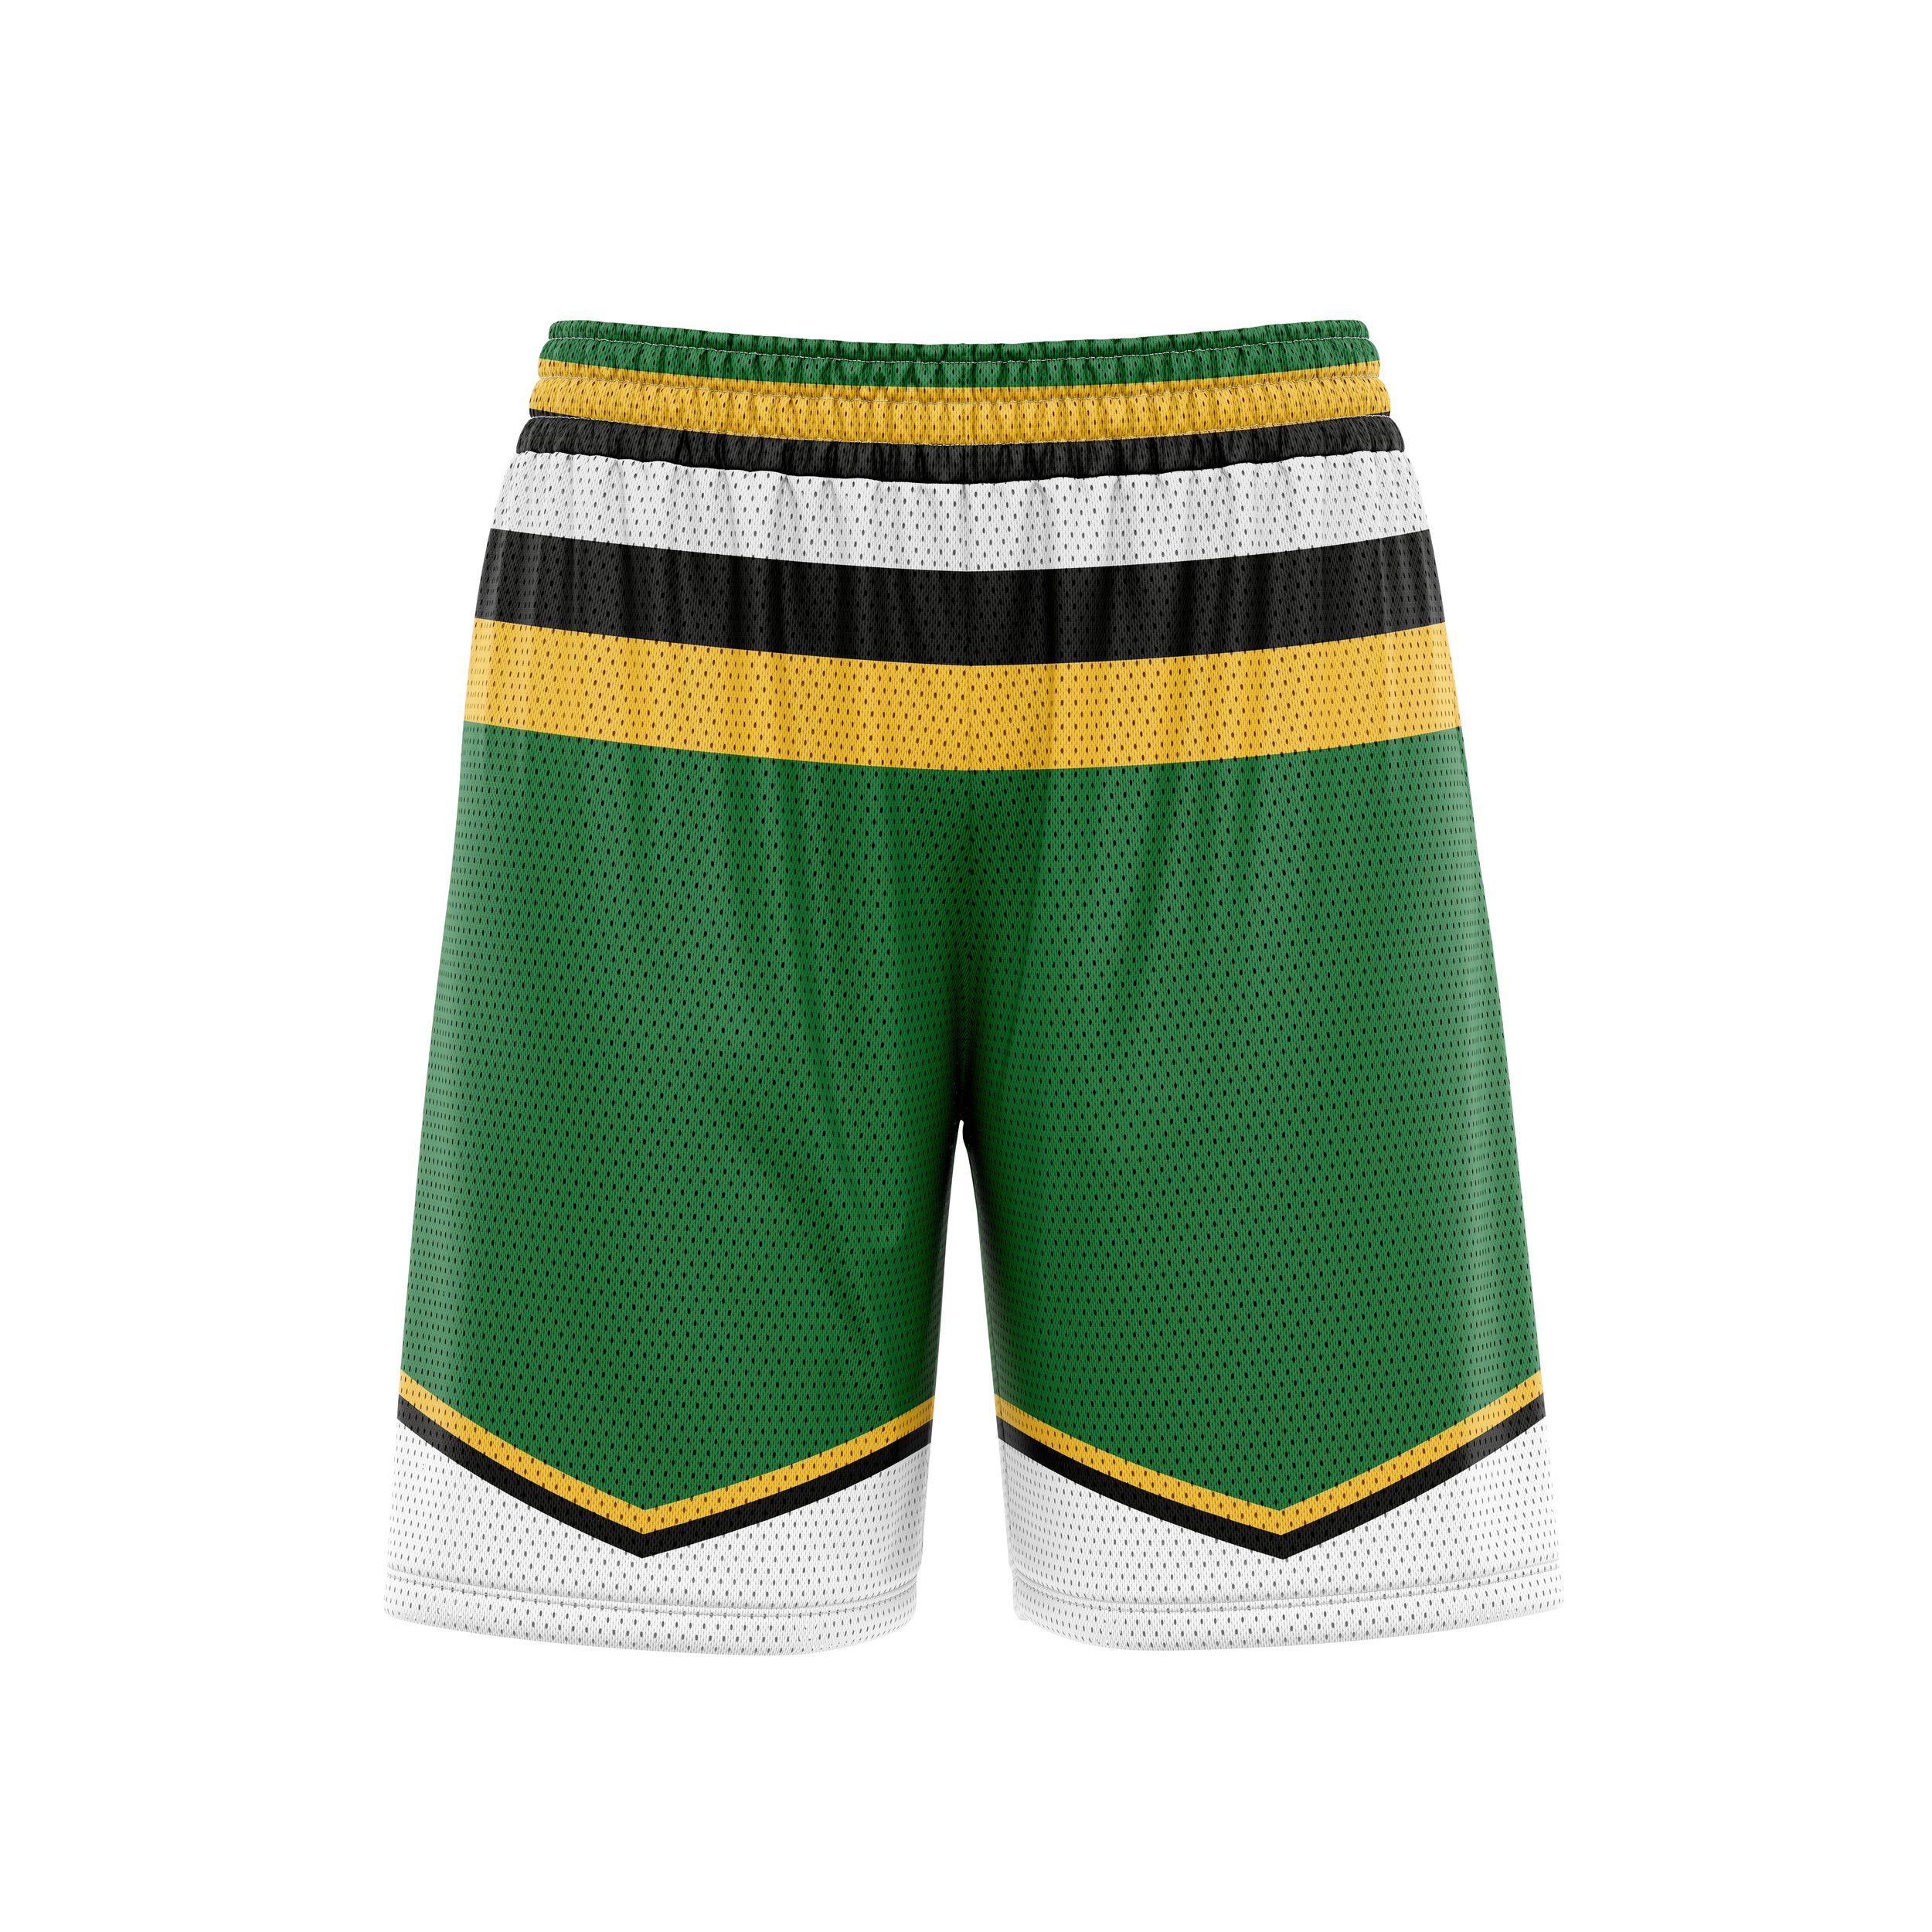 Field hockey shorts FOR WEB SITE.jpg